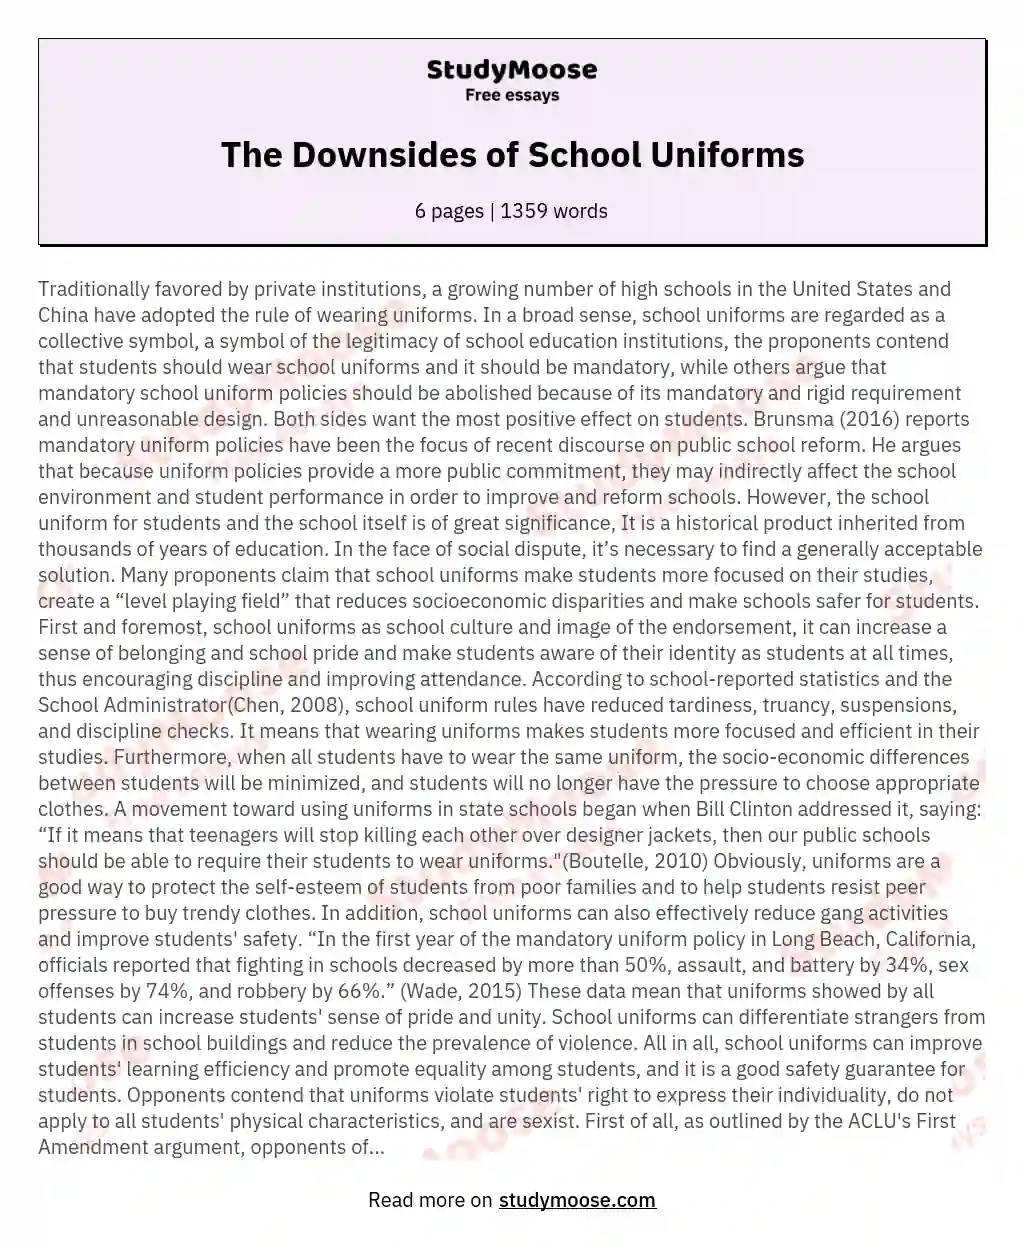 The Downsides of School Uniforms essay